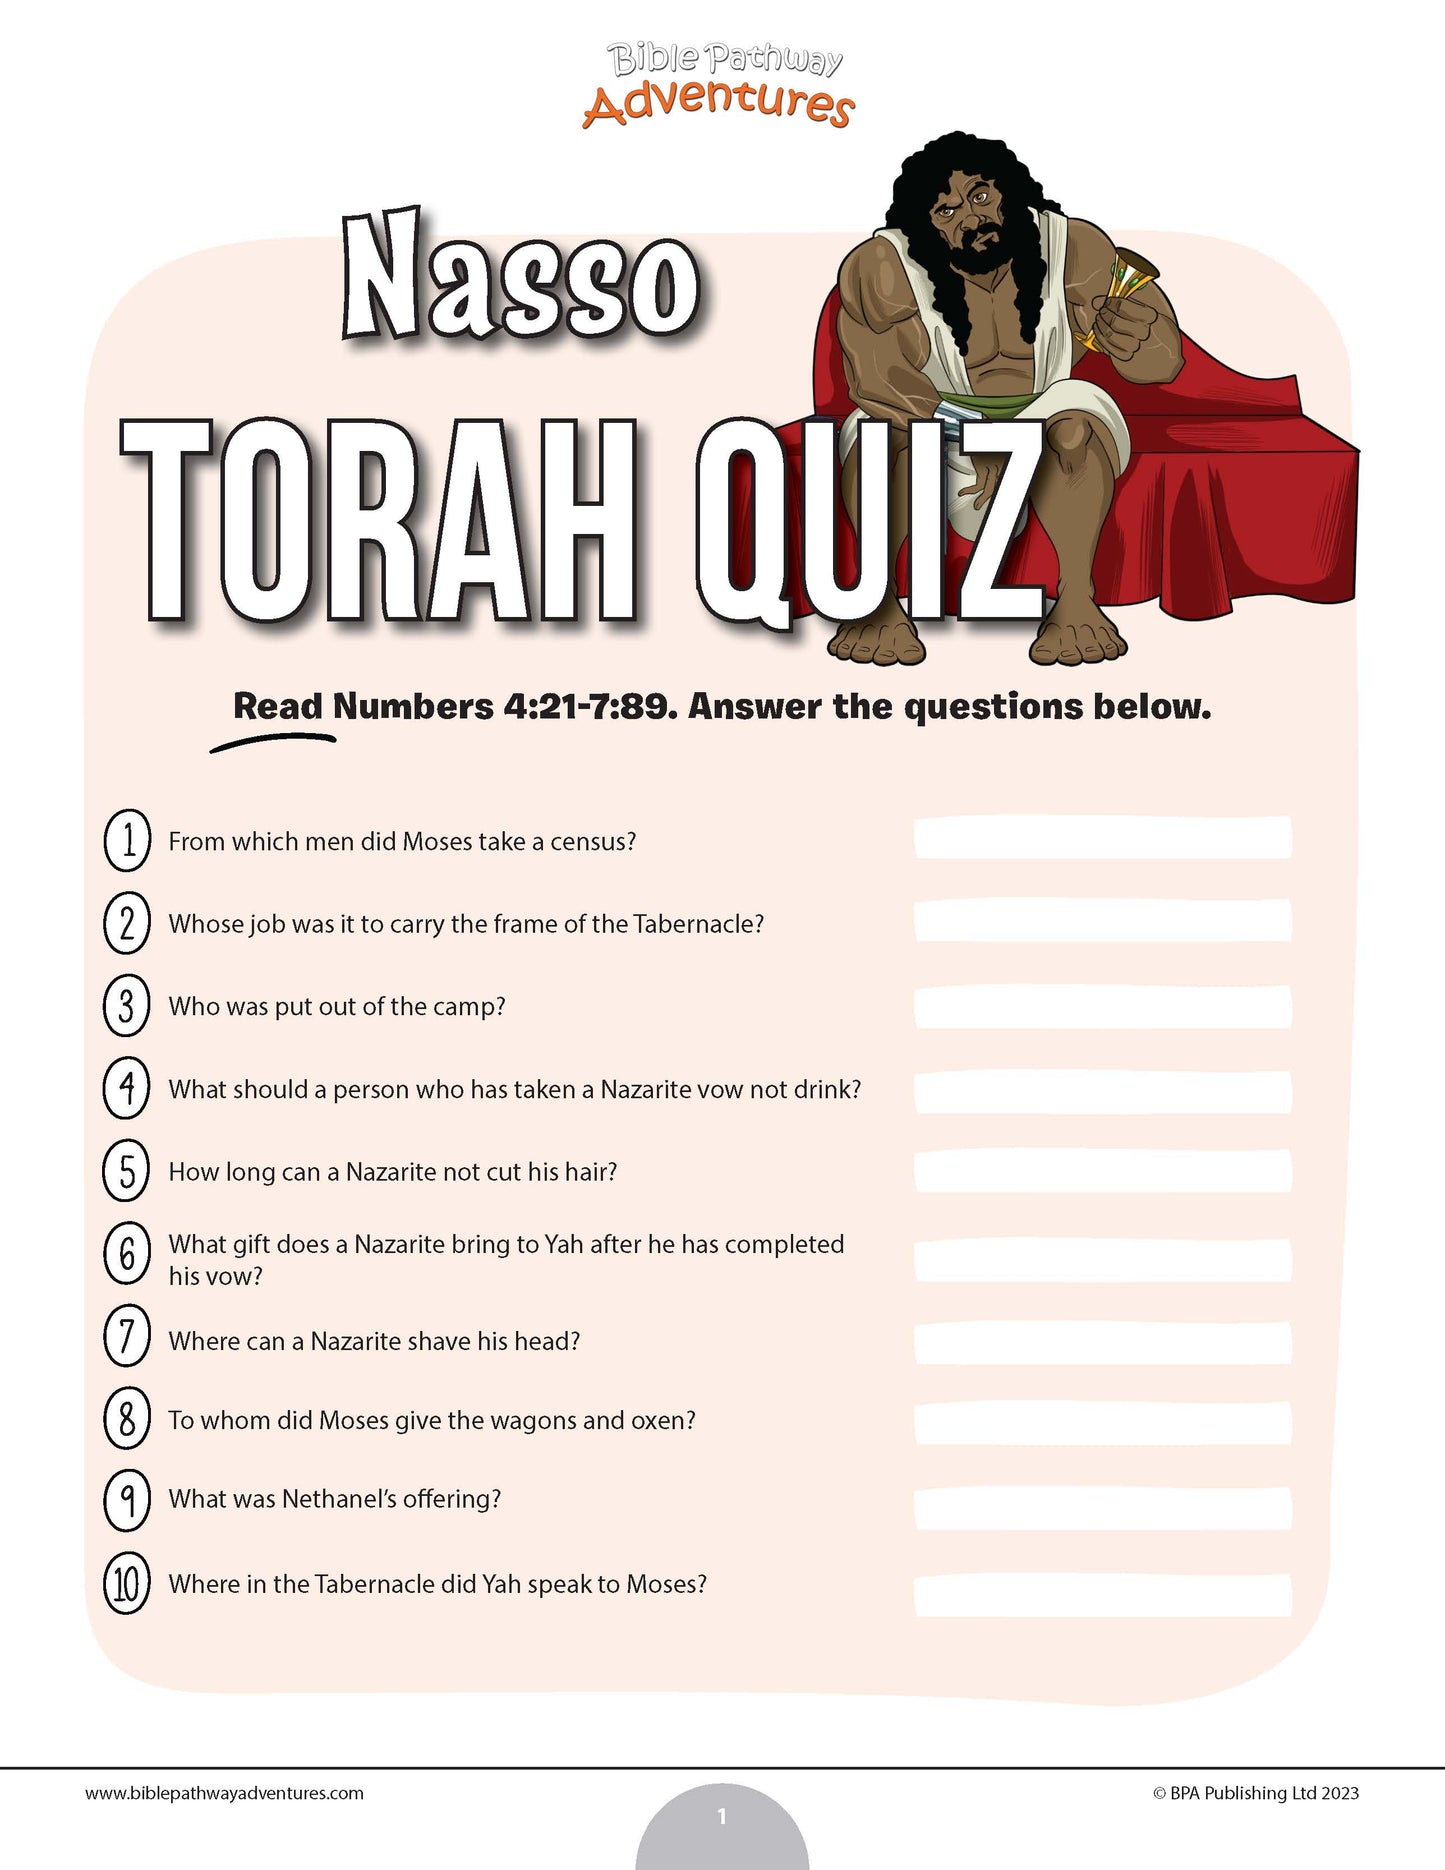 Nasso Torah quiz